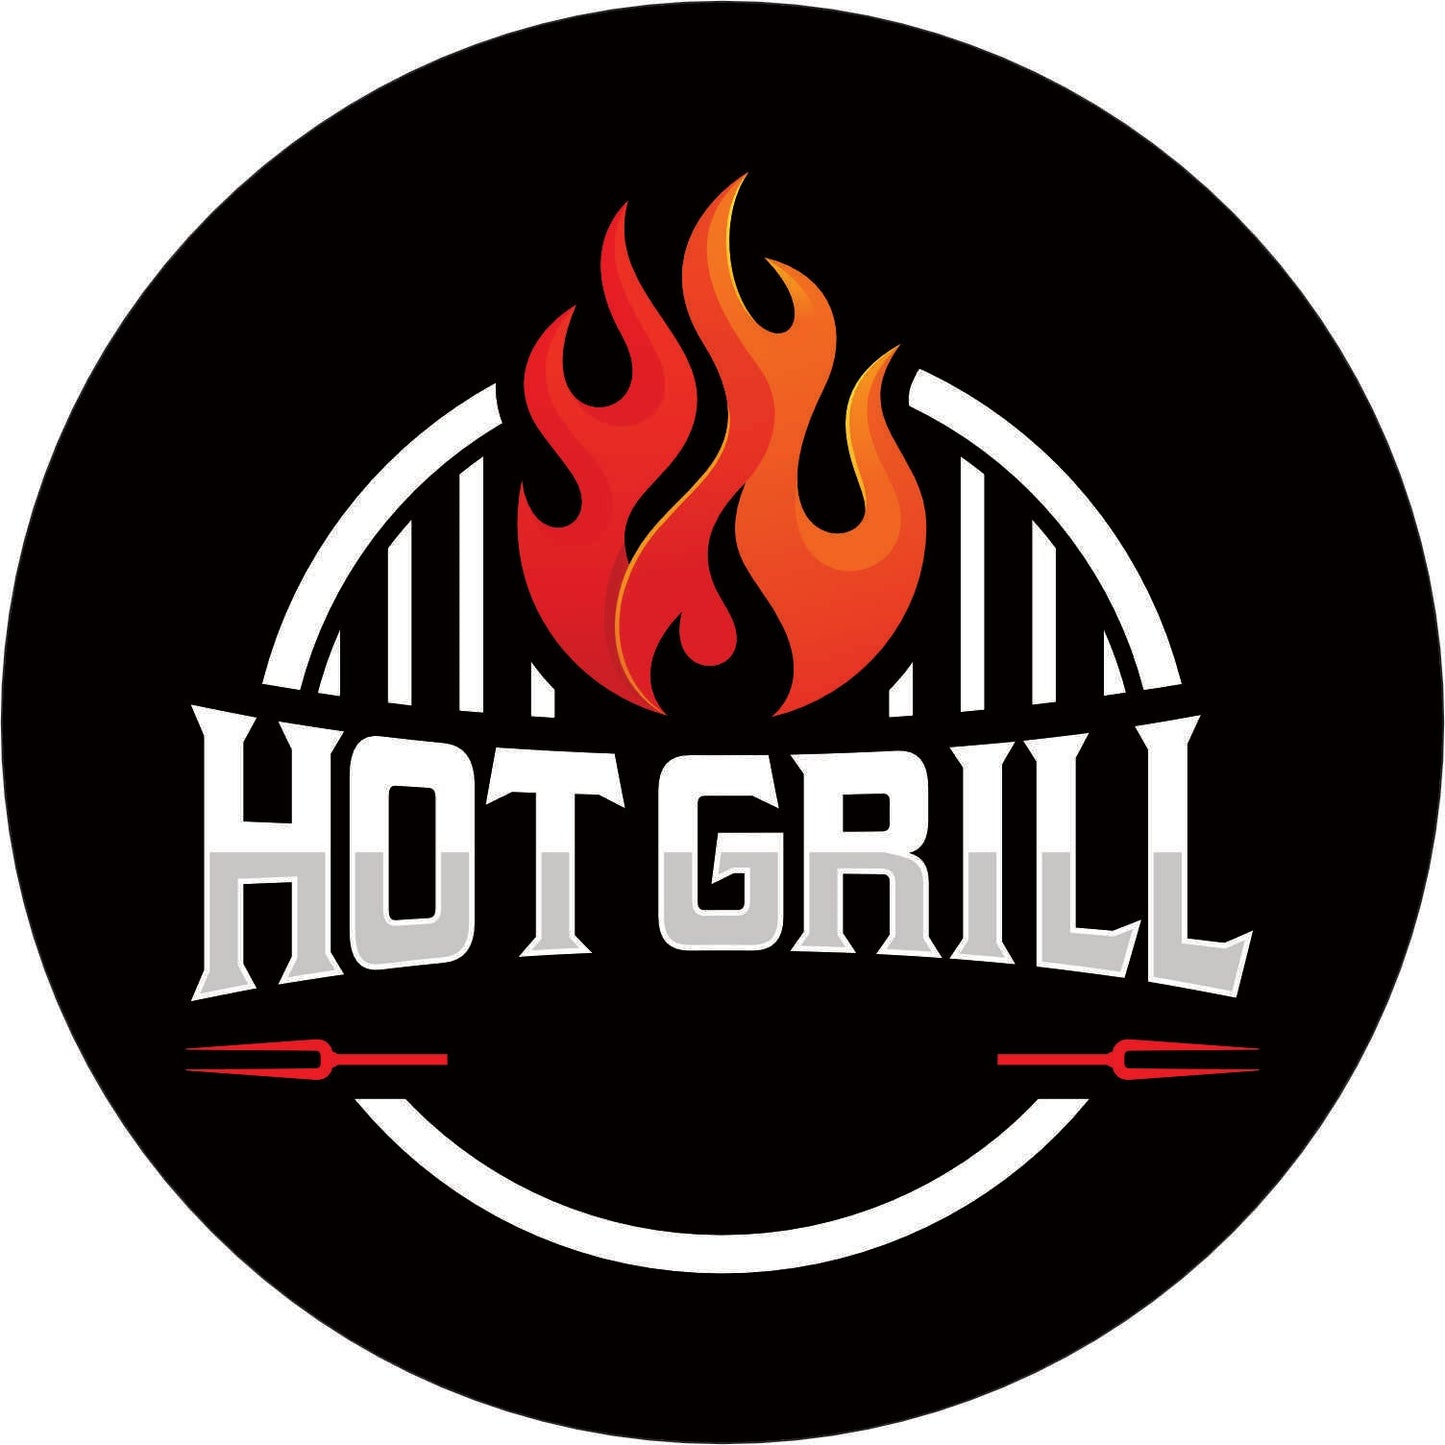 045-Single-sided illuminated sign - BBQ Hot Grill